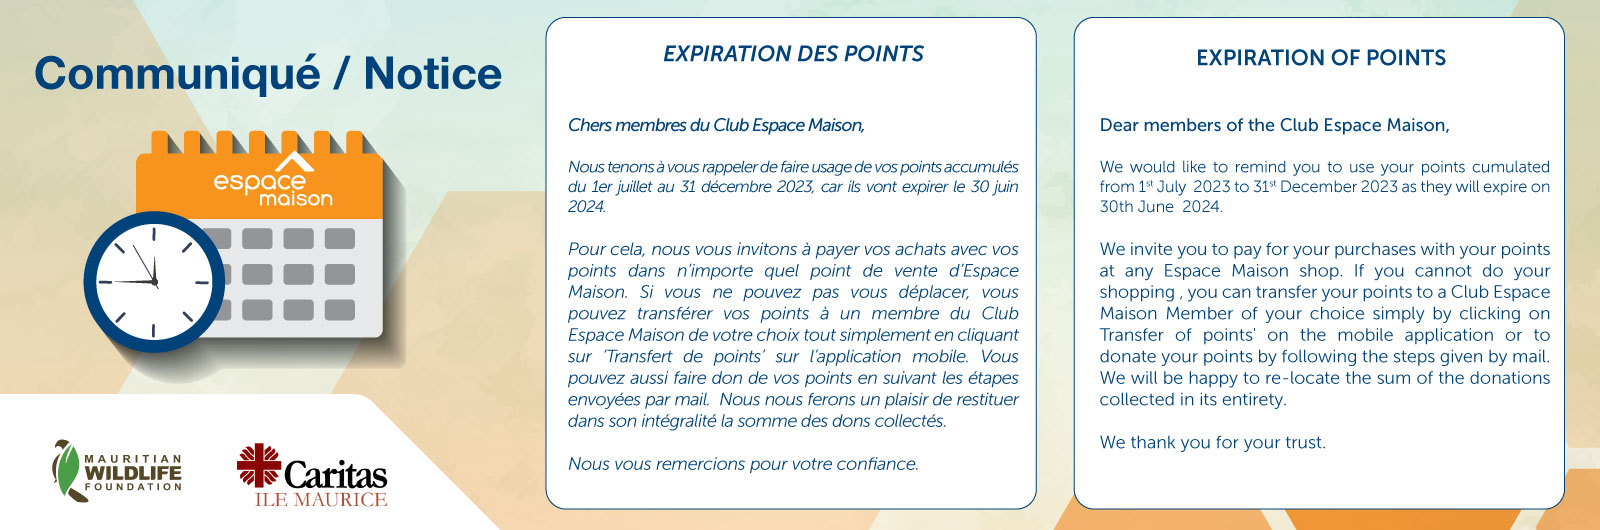 Notice - Expiration of points